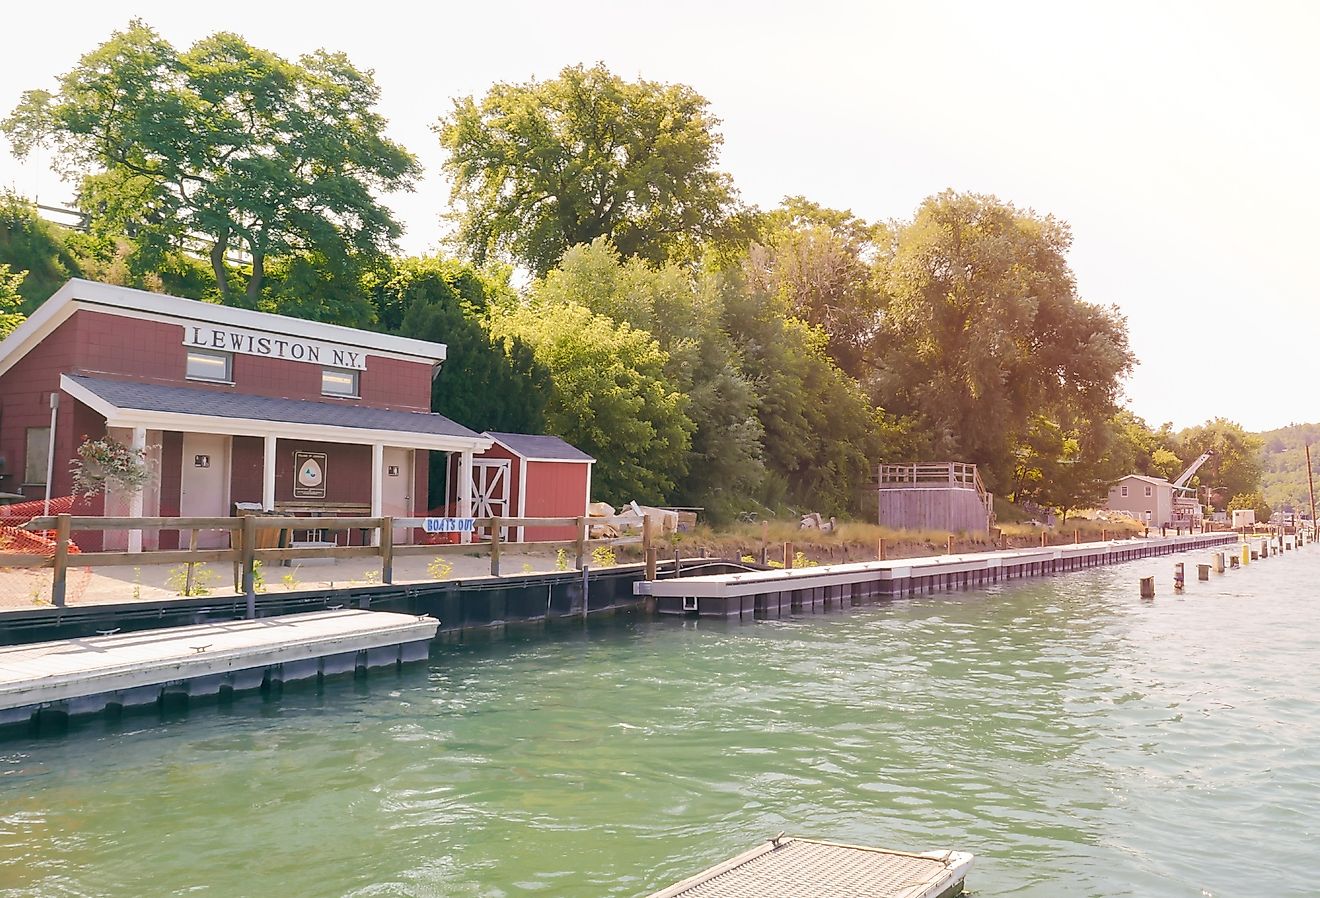 Dock along the Niagara River in Lewiston, New York. Image credit Atomazul via Shutterstock